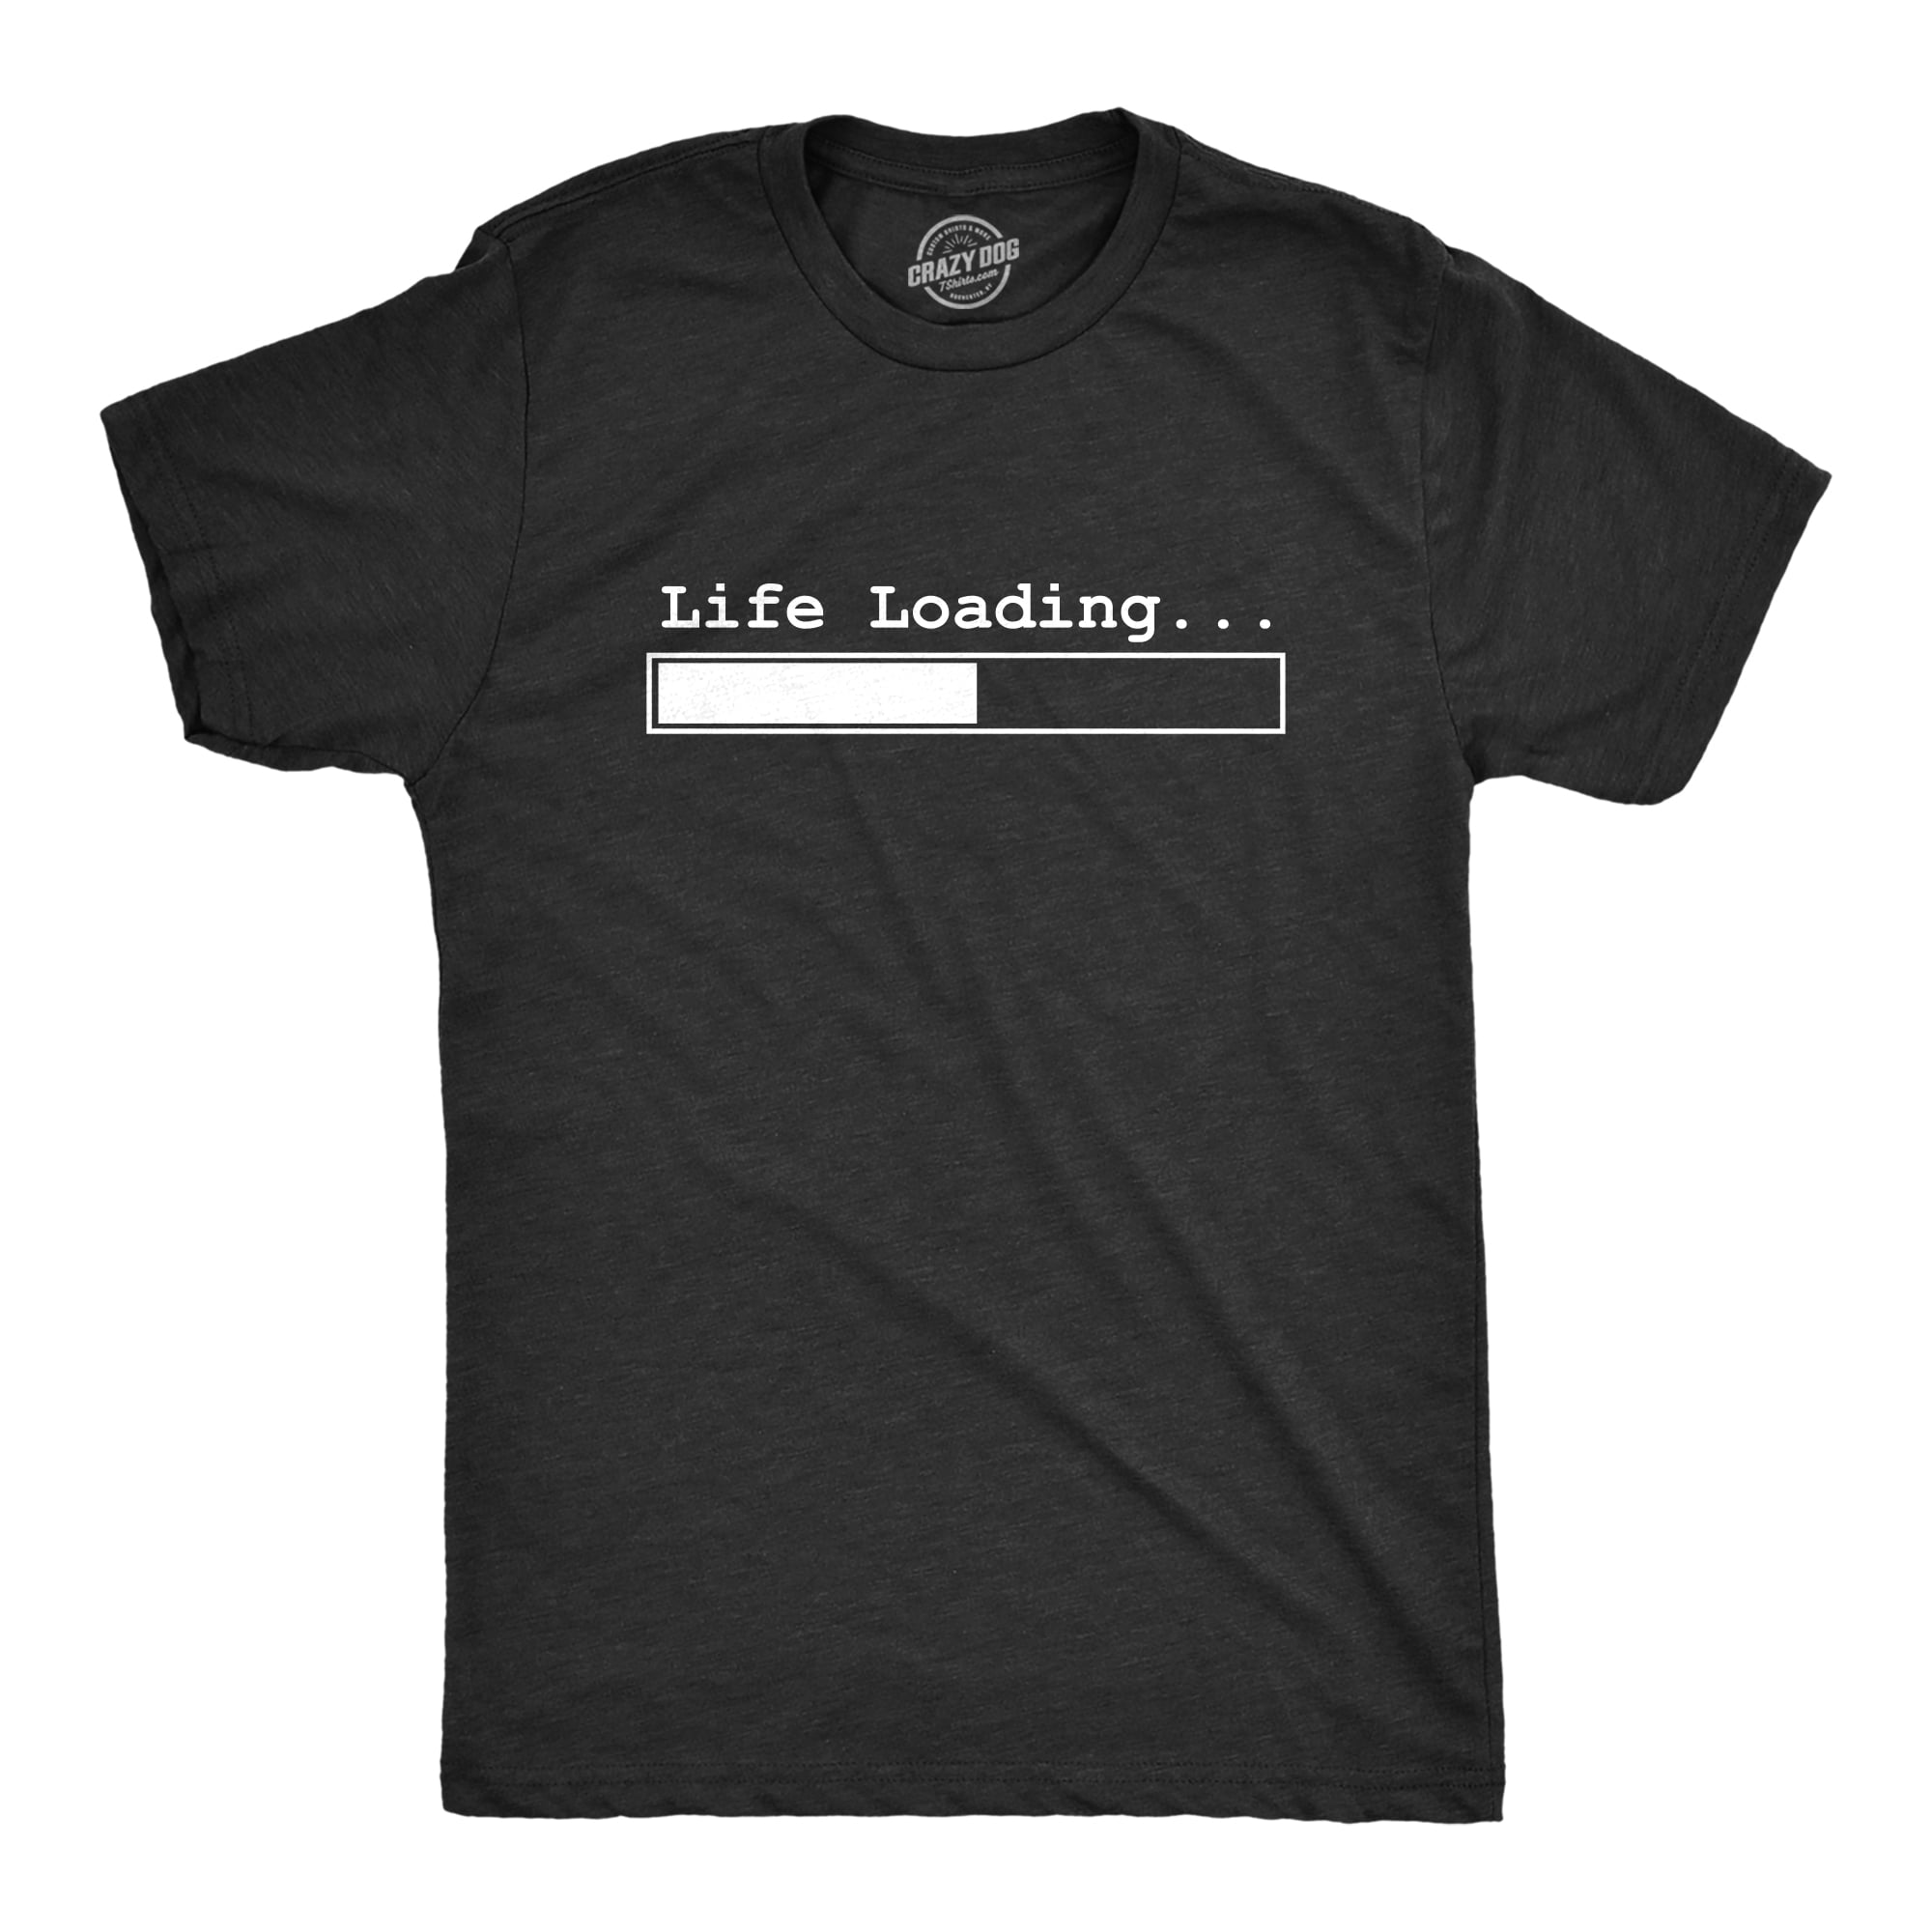 Crazy Dog T Shirts Mens Life Loading Tshirt Funny Internet Meme Humor Computer Tee Walmart Com Walmart Com